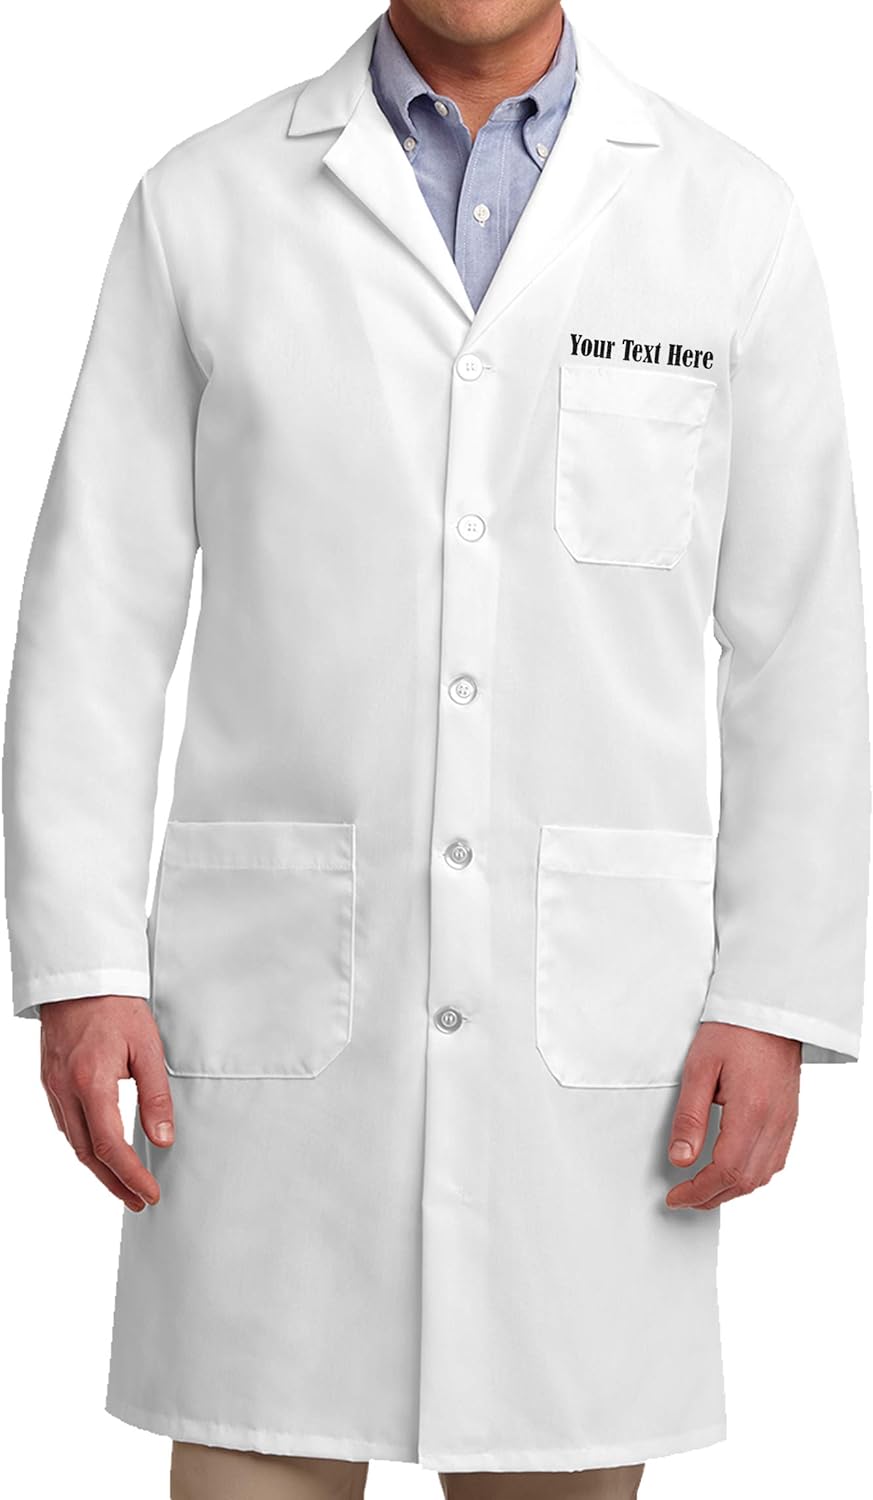 Men in white lab coats.